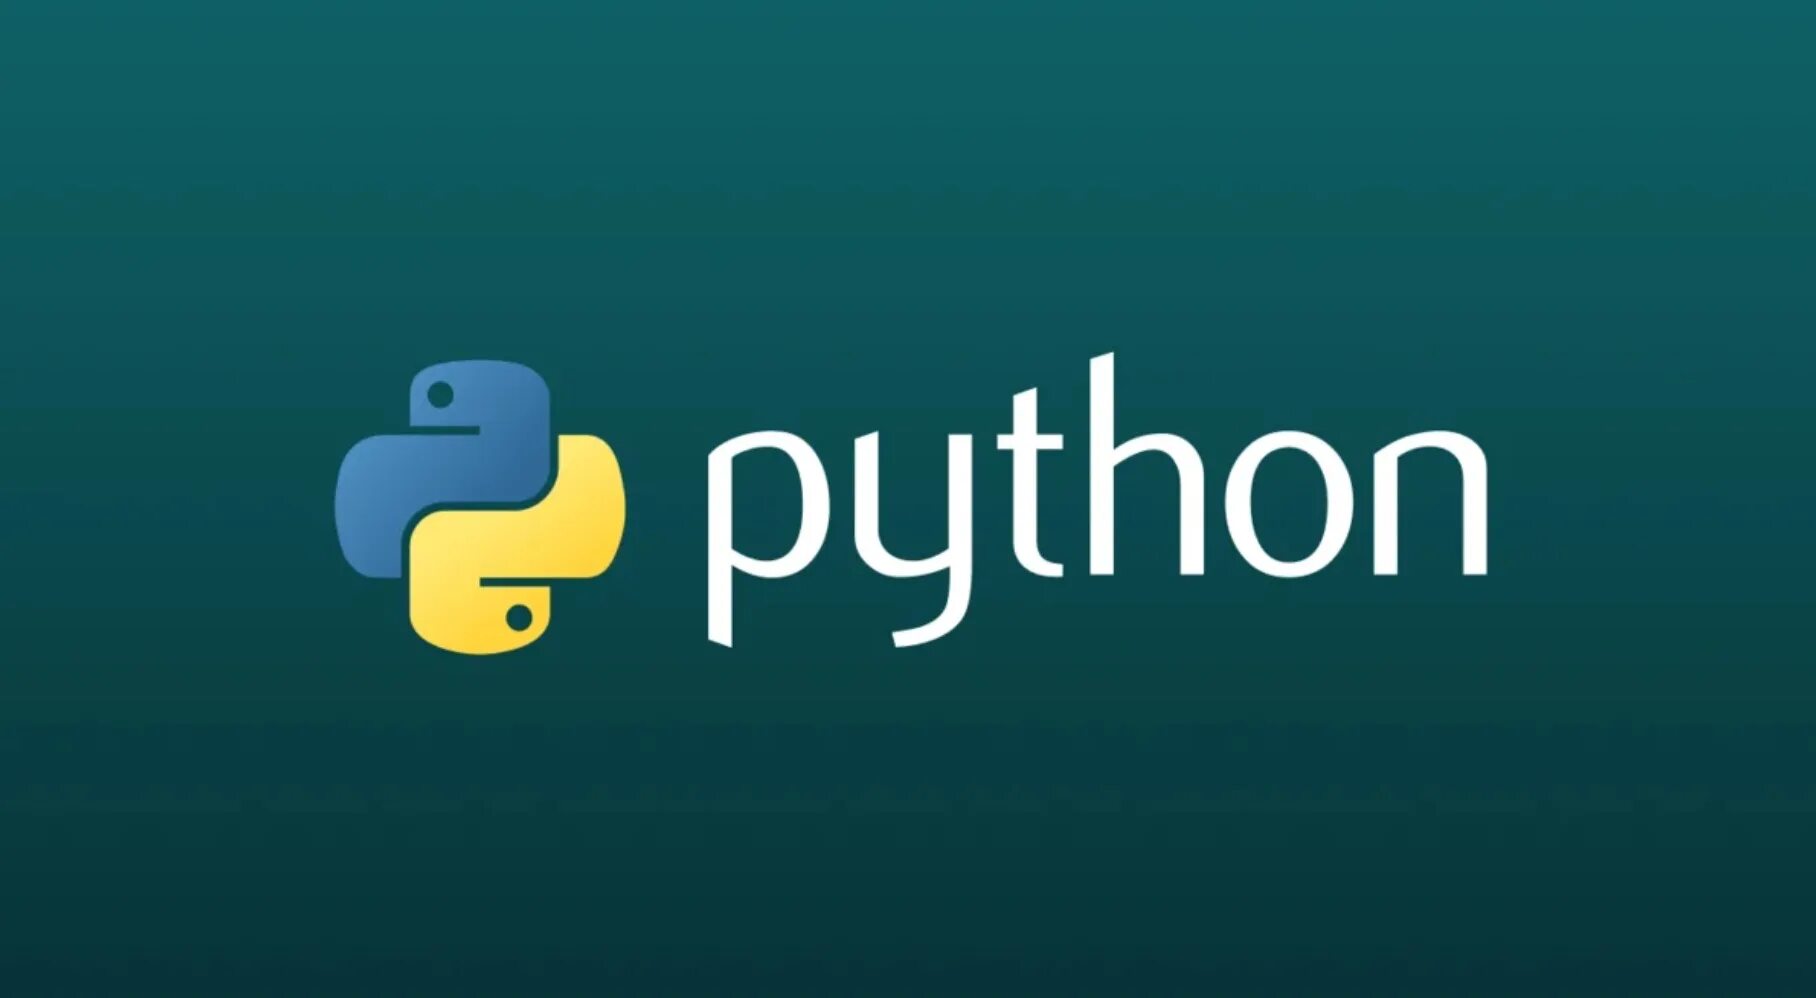 Python getattr. Пайтон язык программирования. Язык программирования Python. Питон программирование. Пион язык программирования.